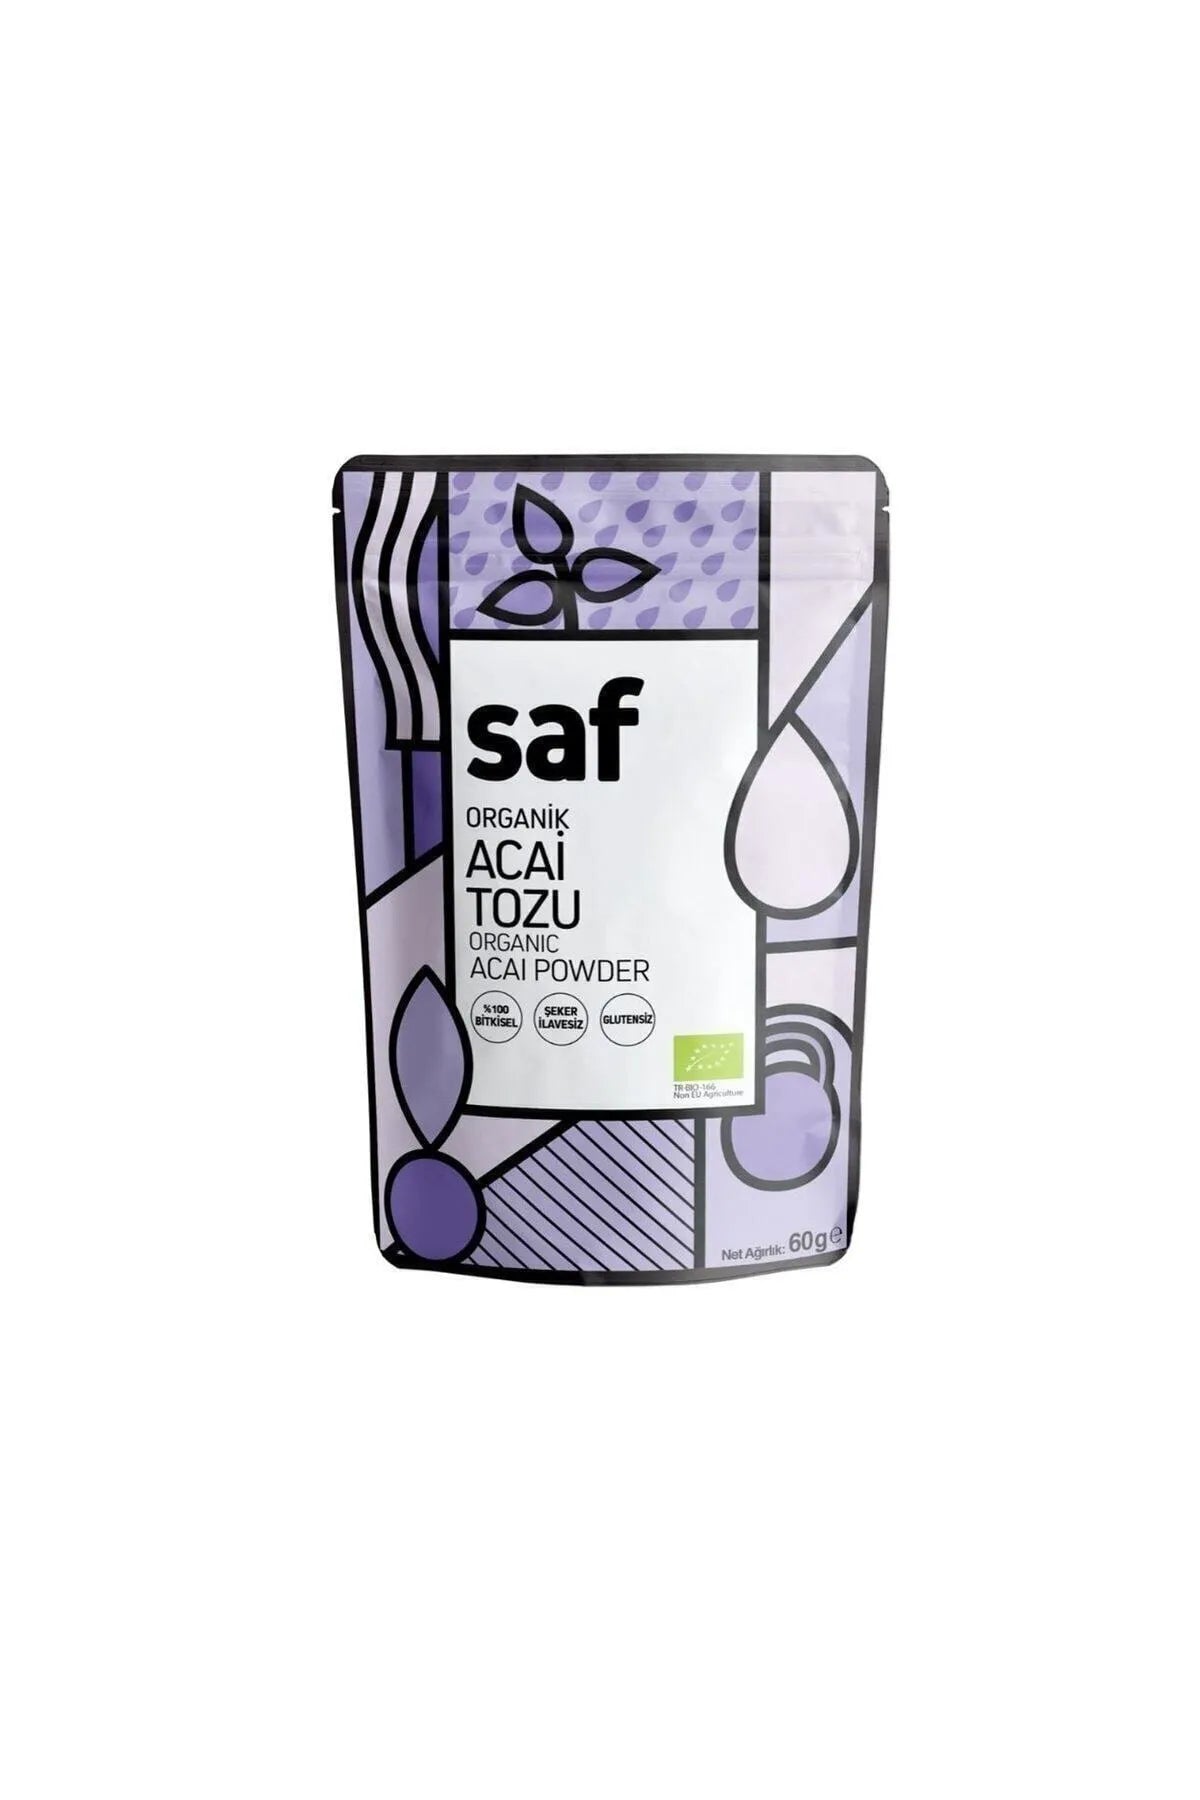 Saf Nutrition Organik Açai Tozu 60 g